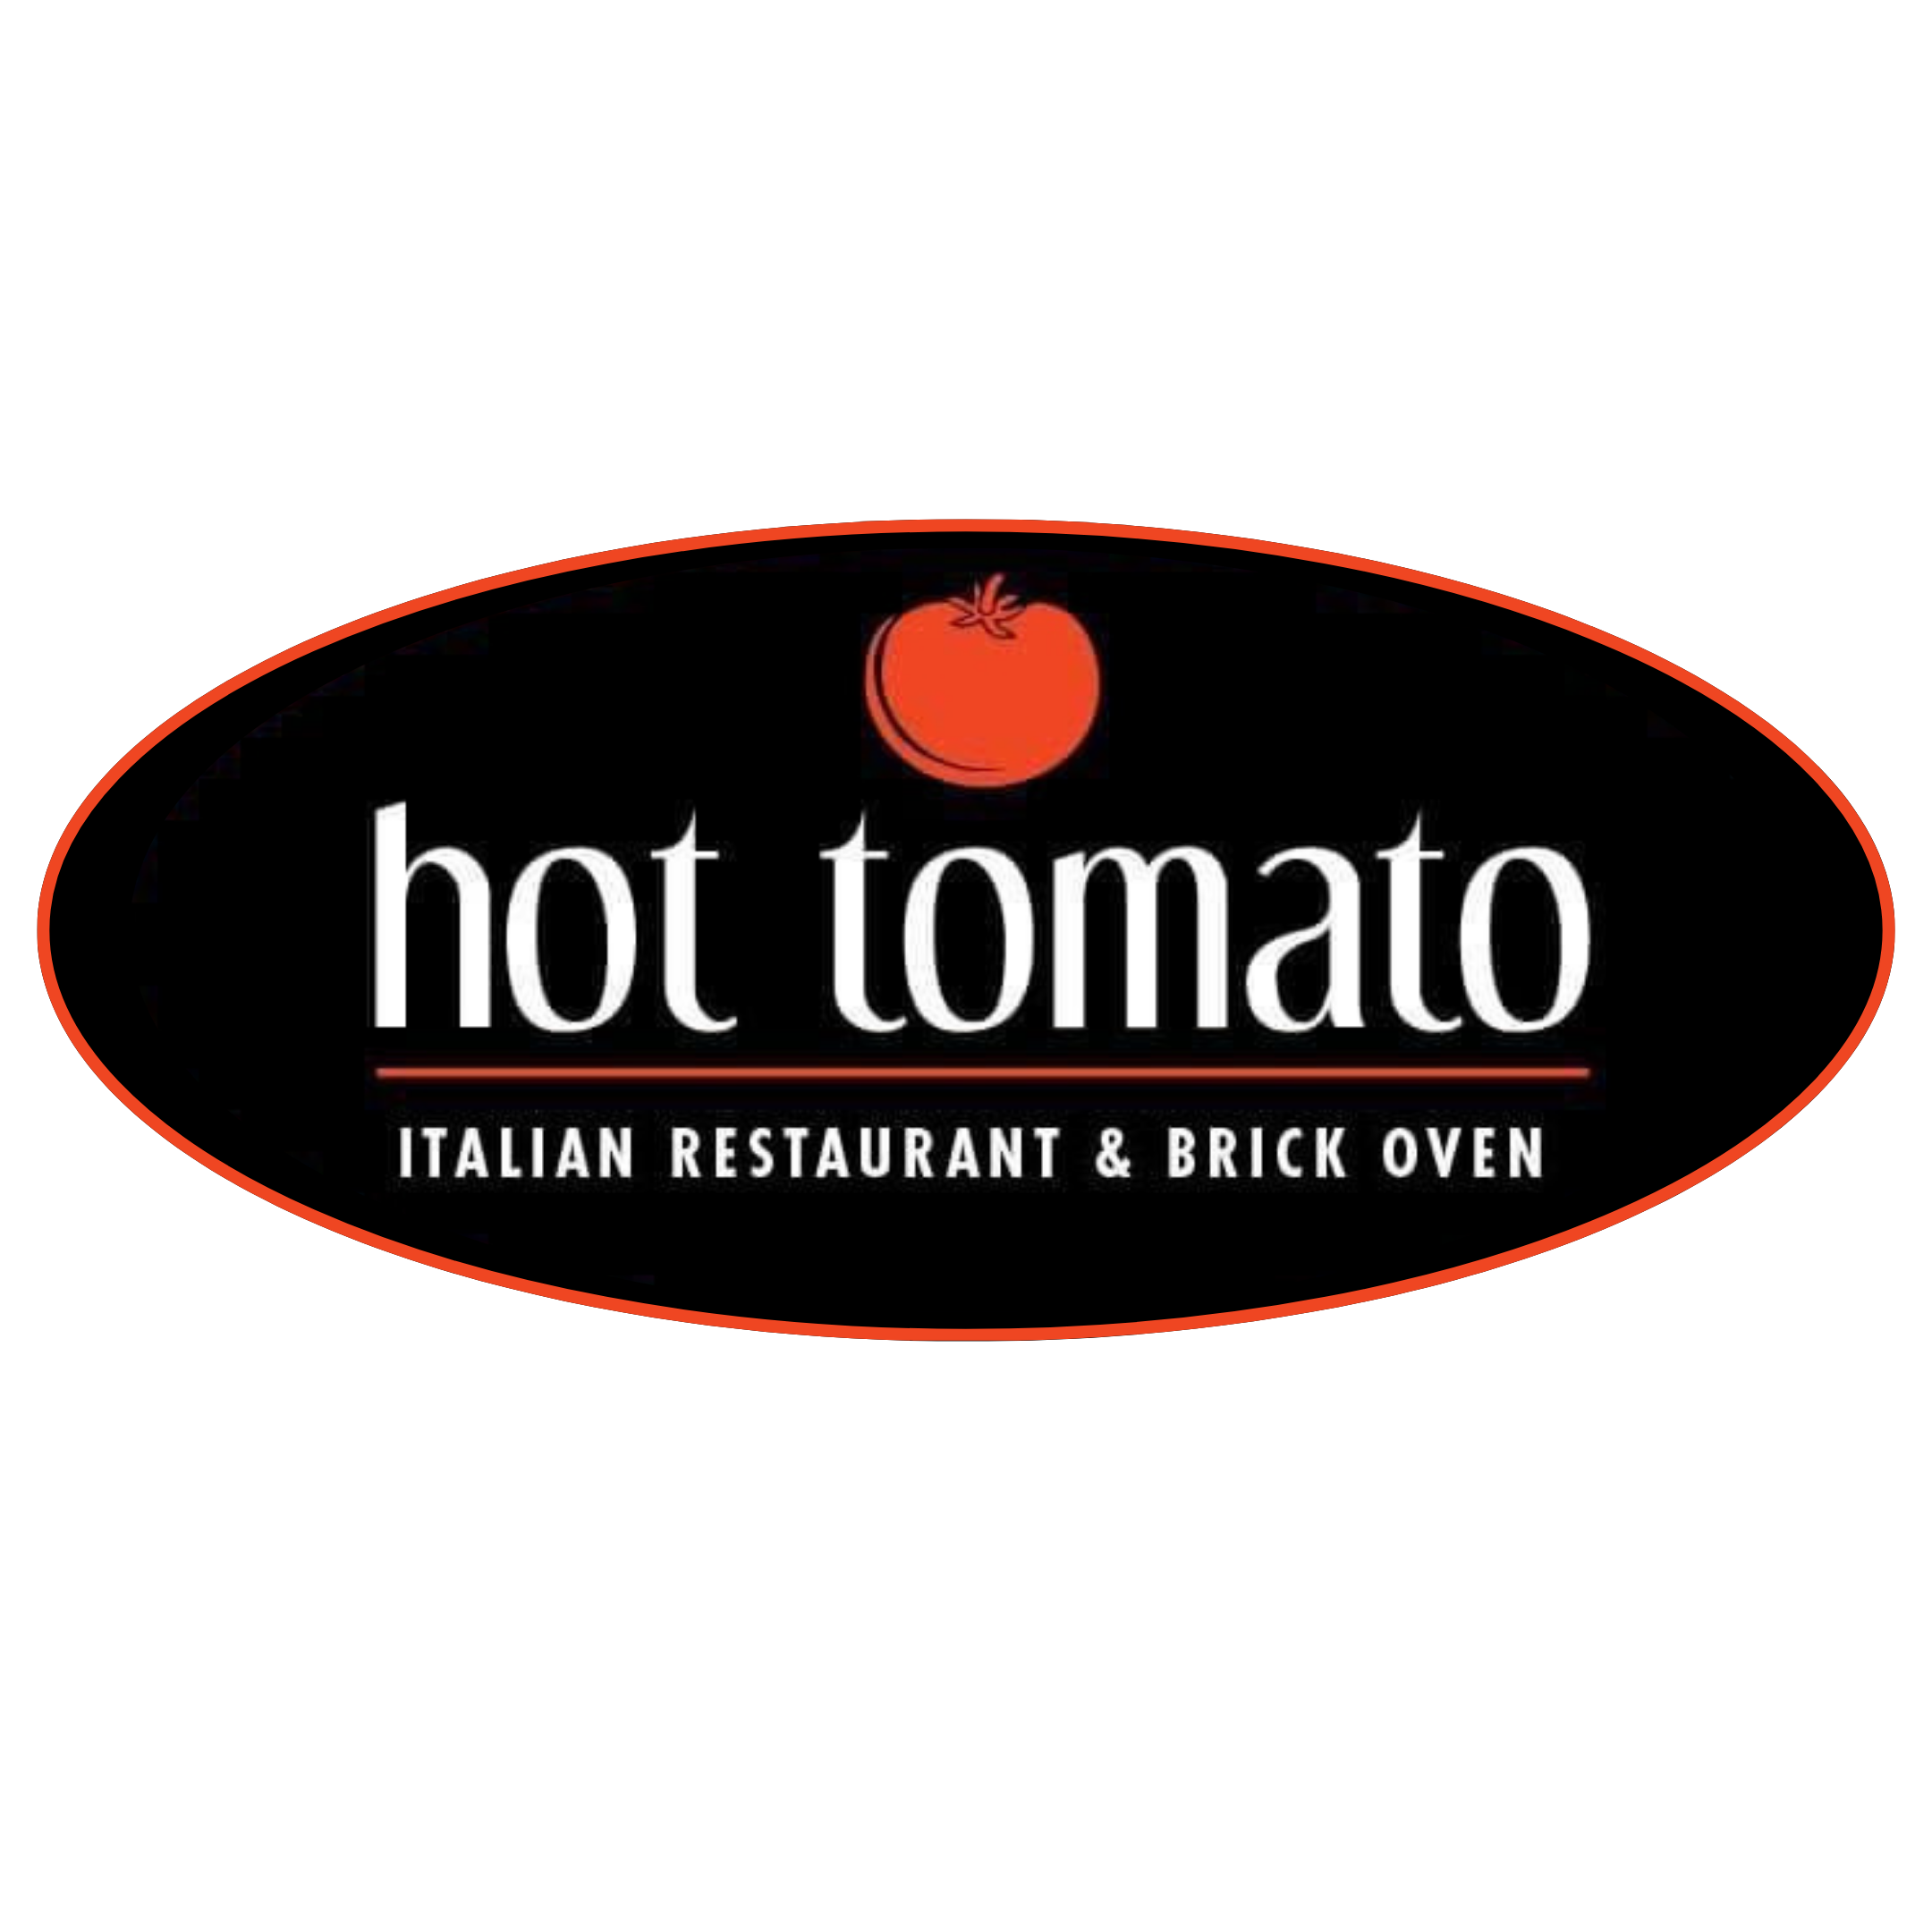 Hot Tomato Italian Restaurant & Brick Oven - Best Italian Pizza Myrtle Beach, SC 